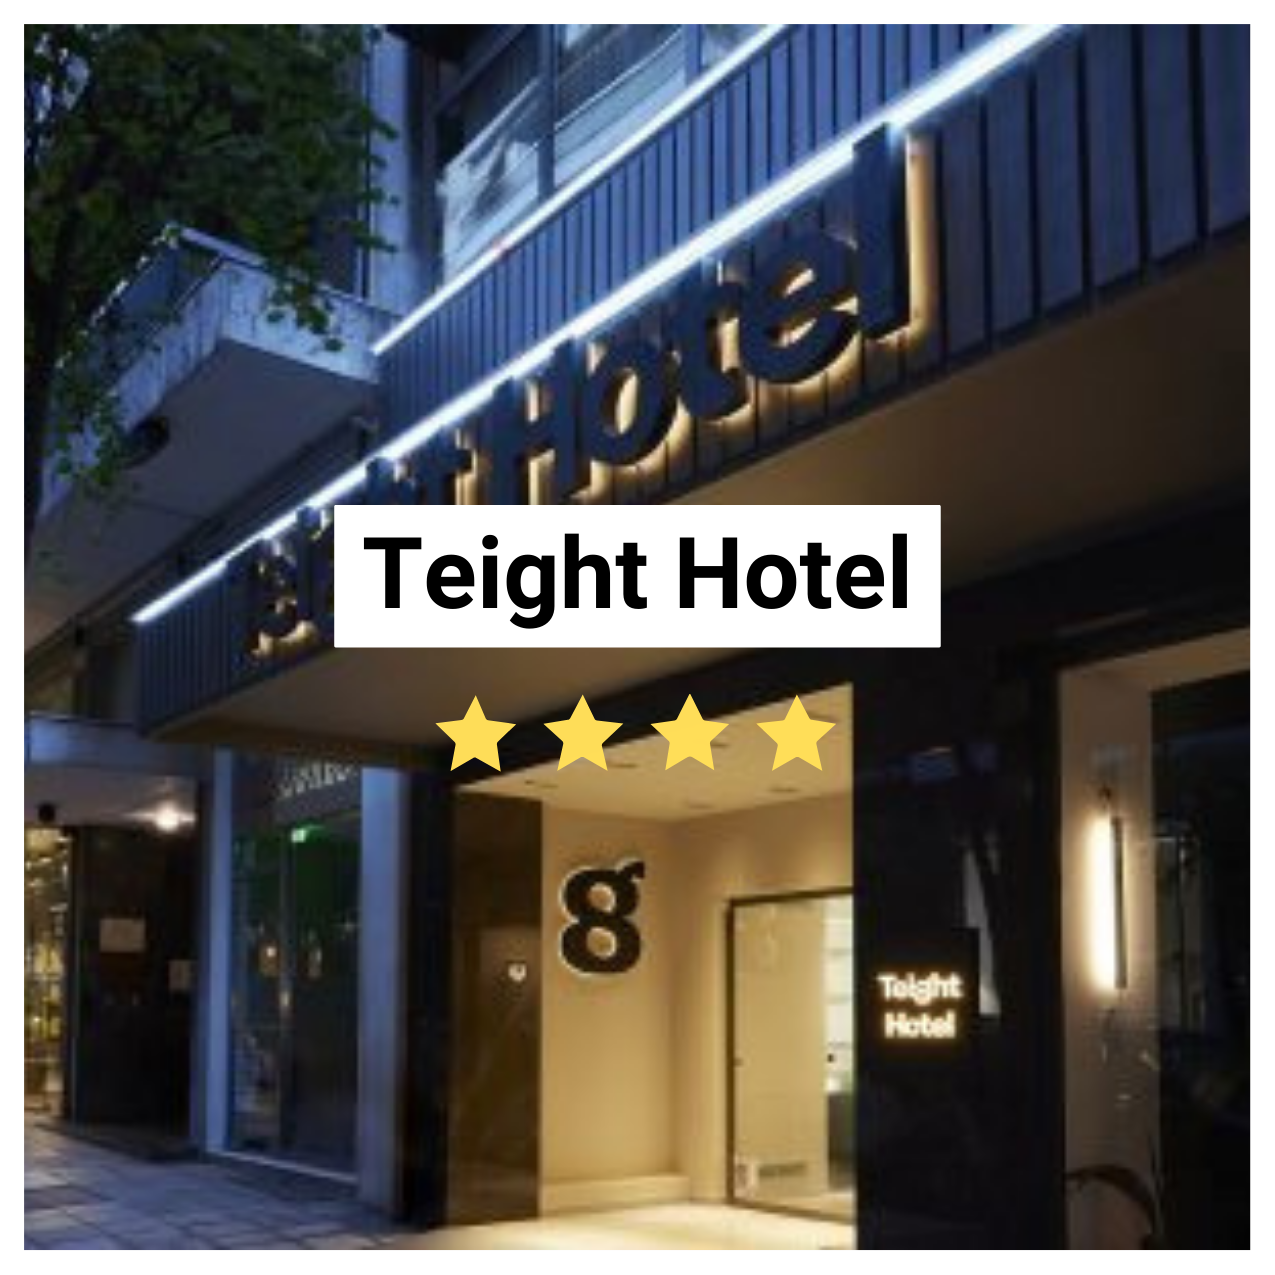 Teight Hotel Image. 